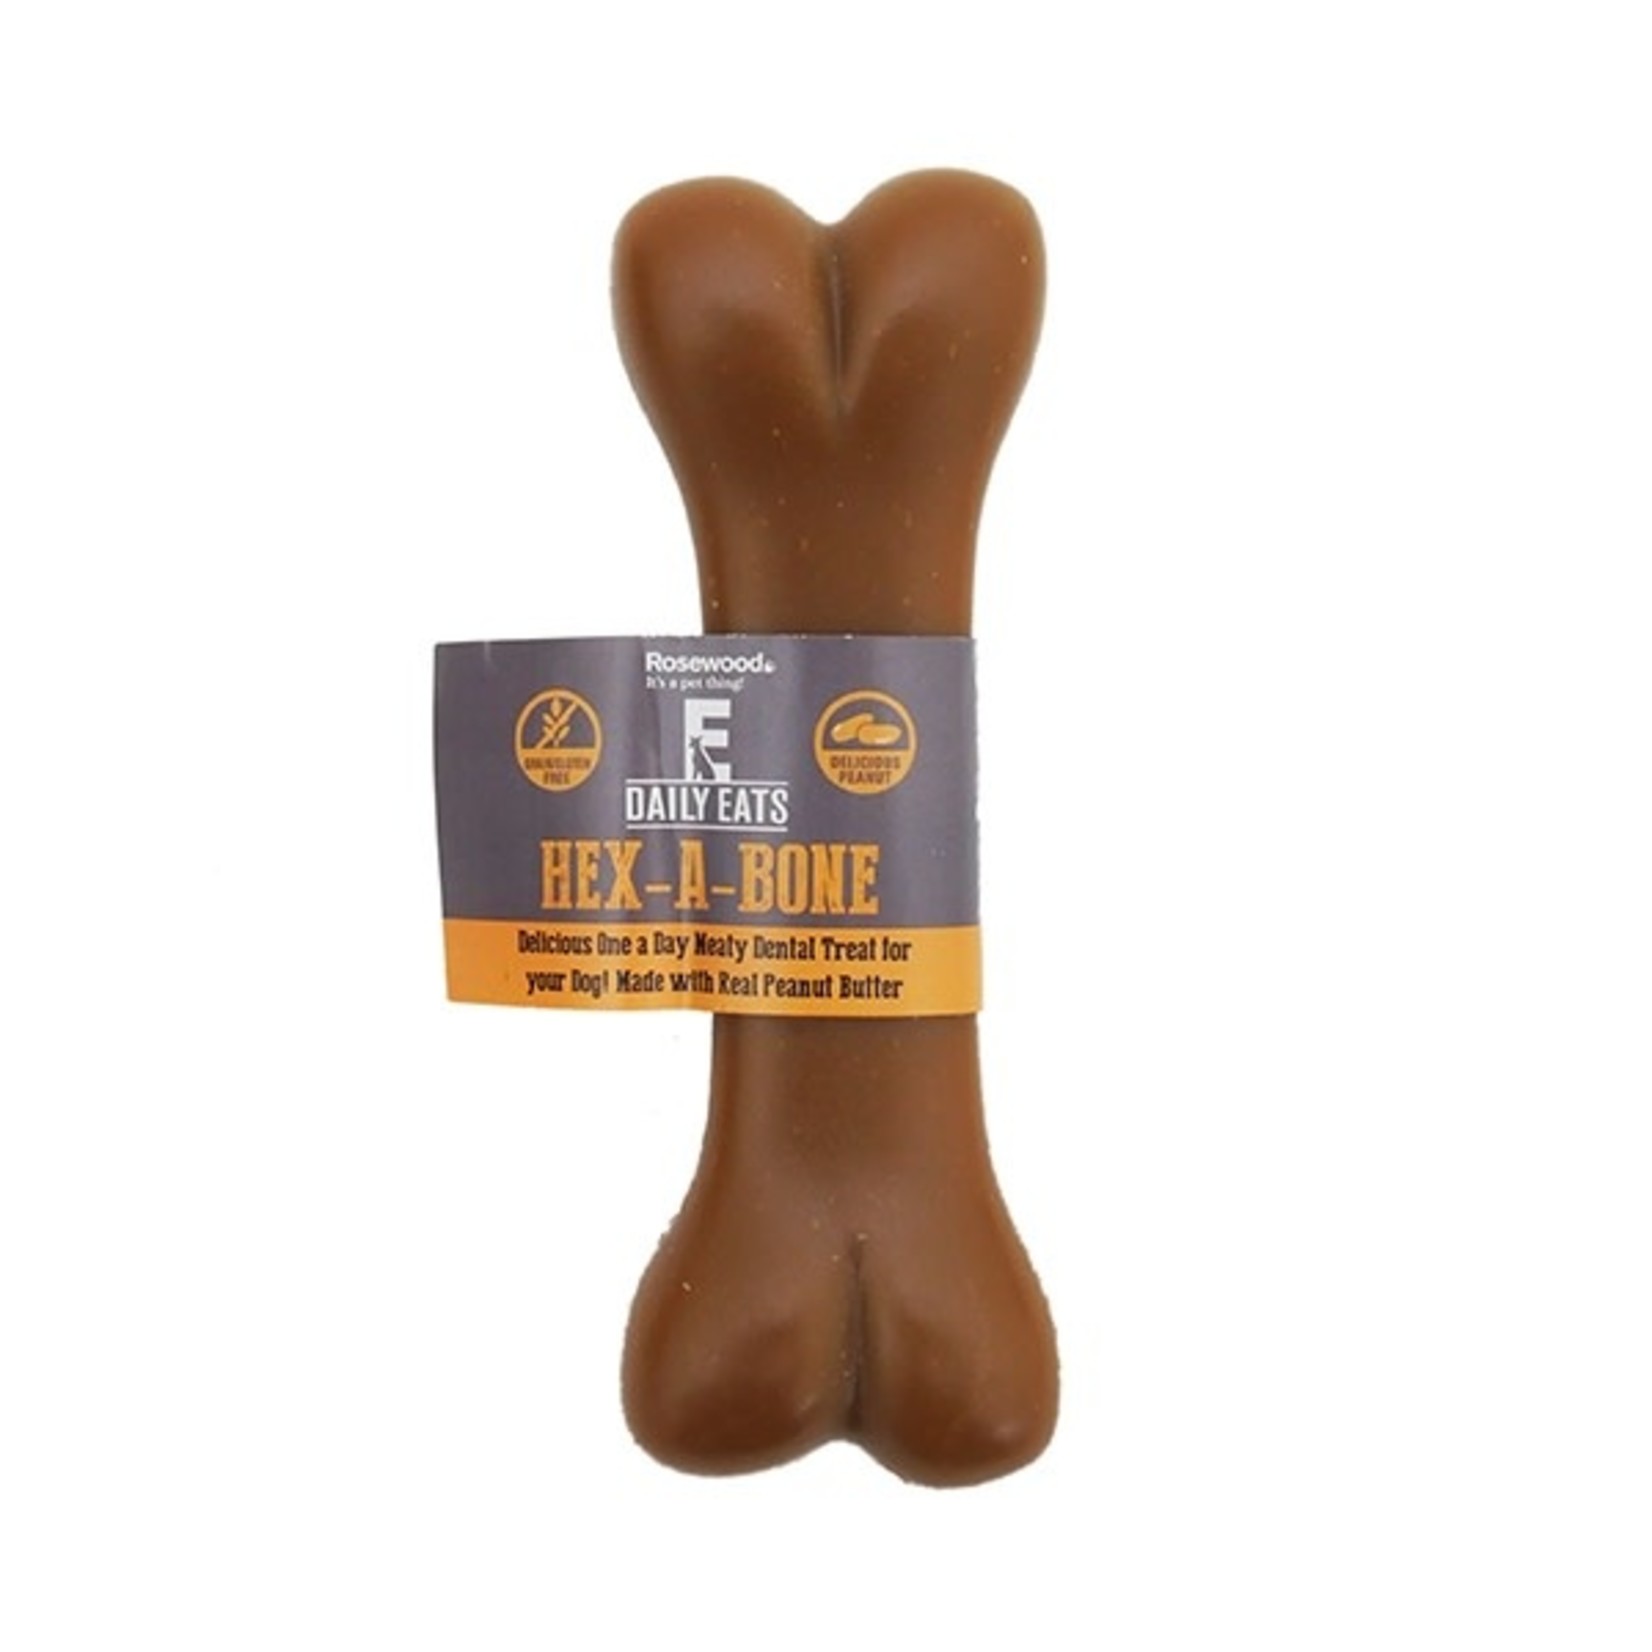 Rosewood Daily Eats Hex-A-Bone Dog Treats Peanut Butter Flavour, 54g